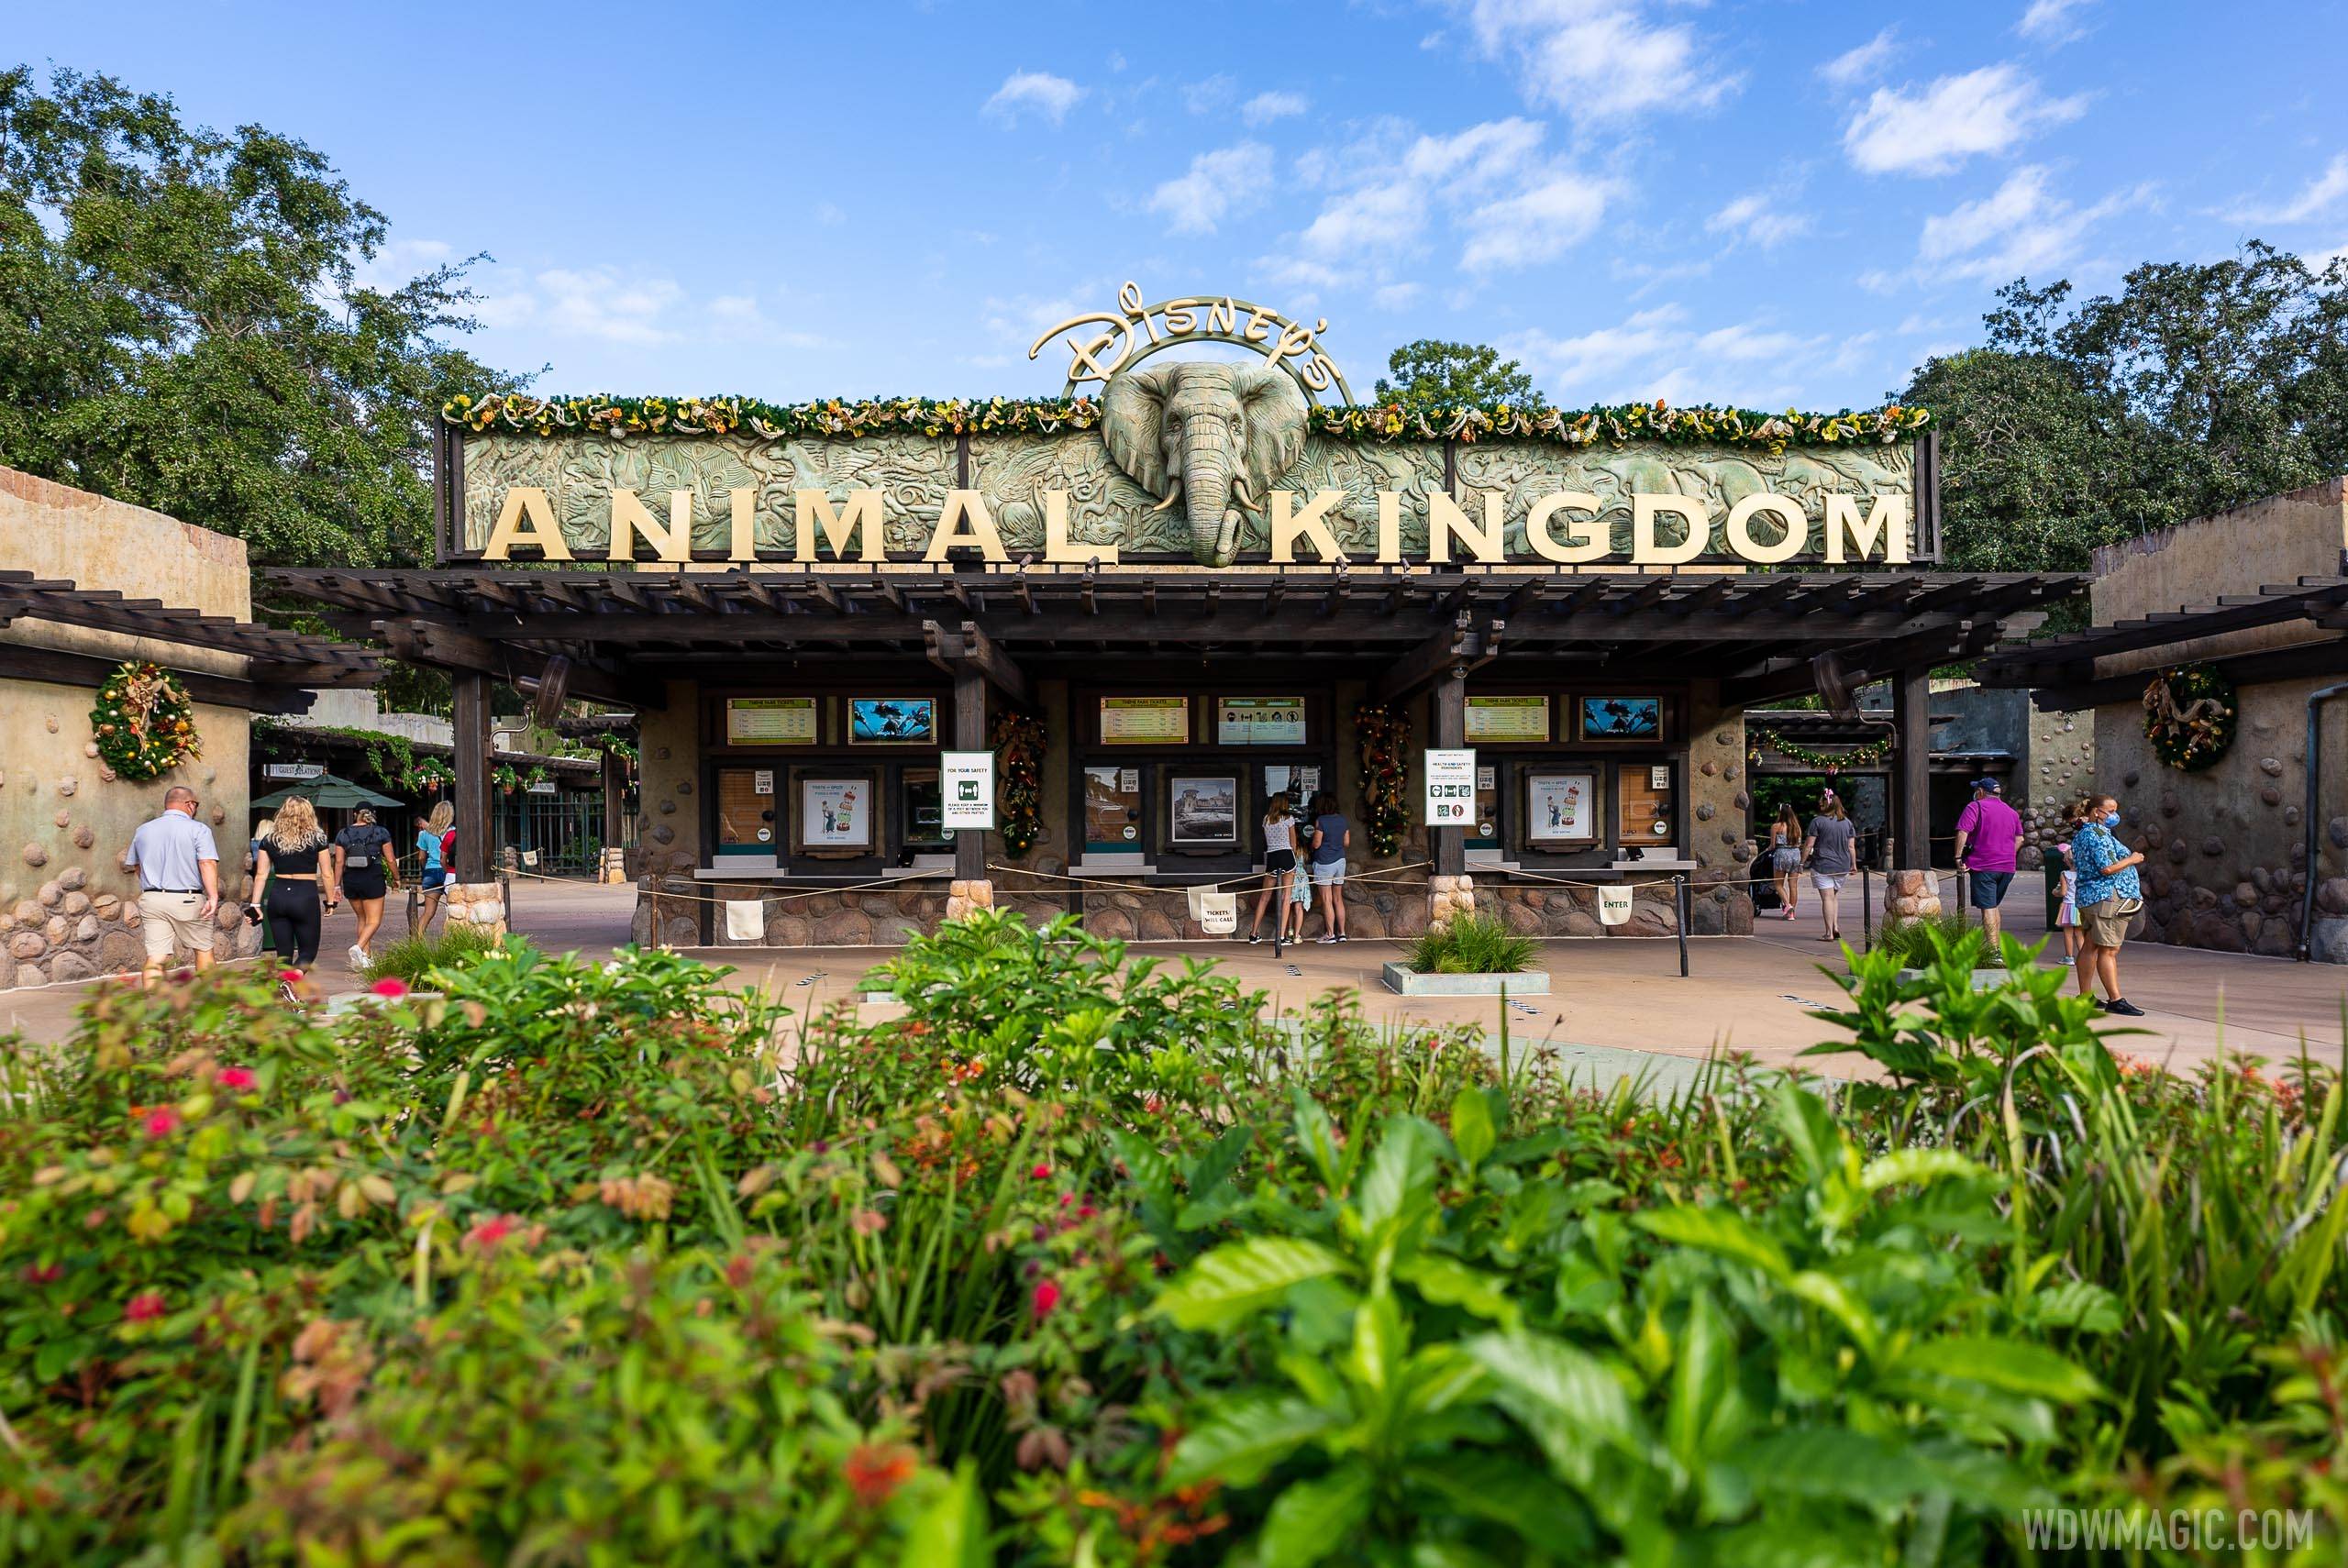 Disney's Animal Kingdom now has more 8am openings in December